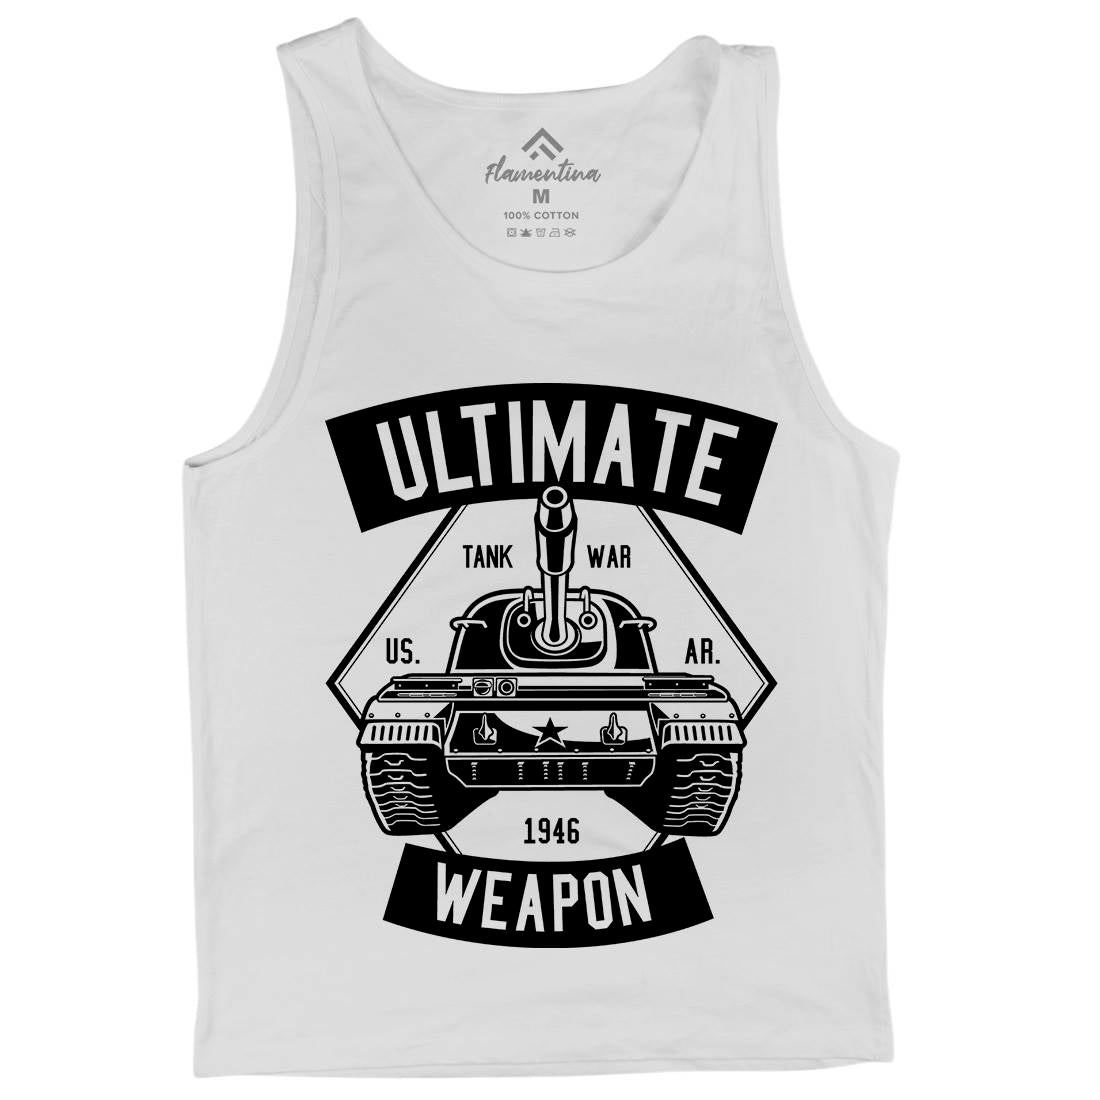 Tank War Ultimate Weapon Mens Tank Top Vest Army B649